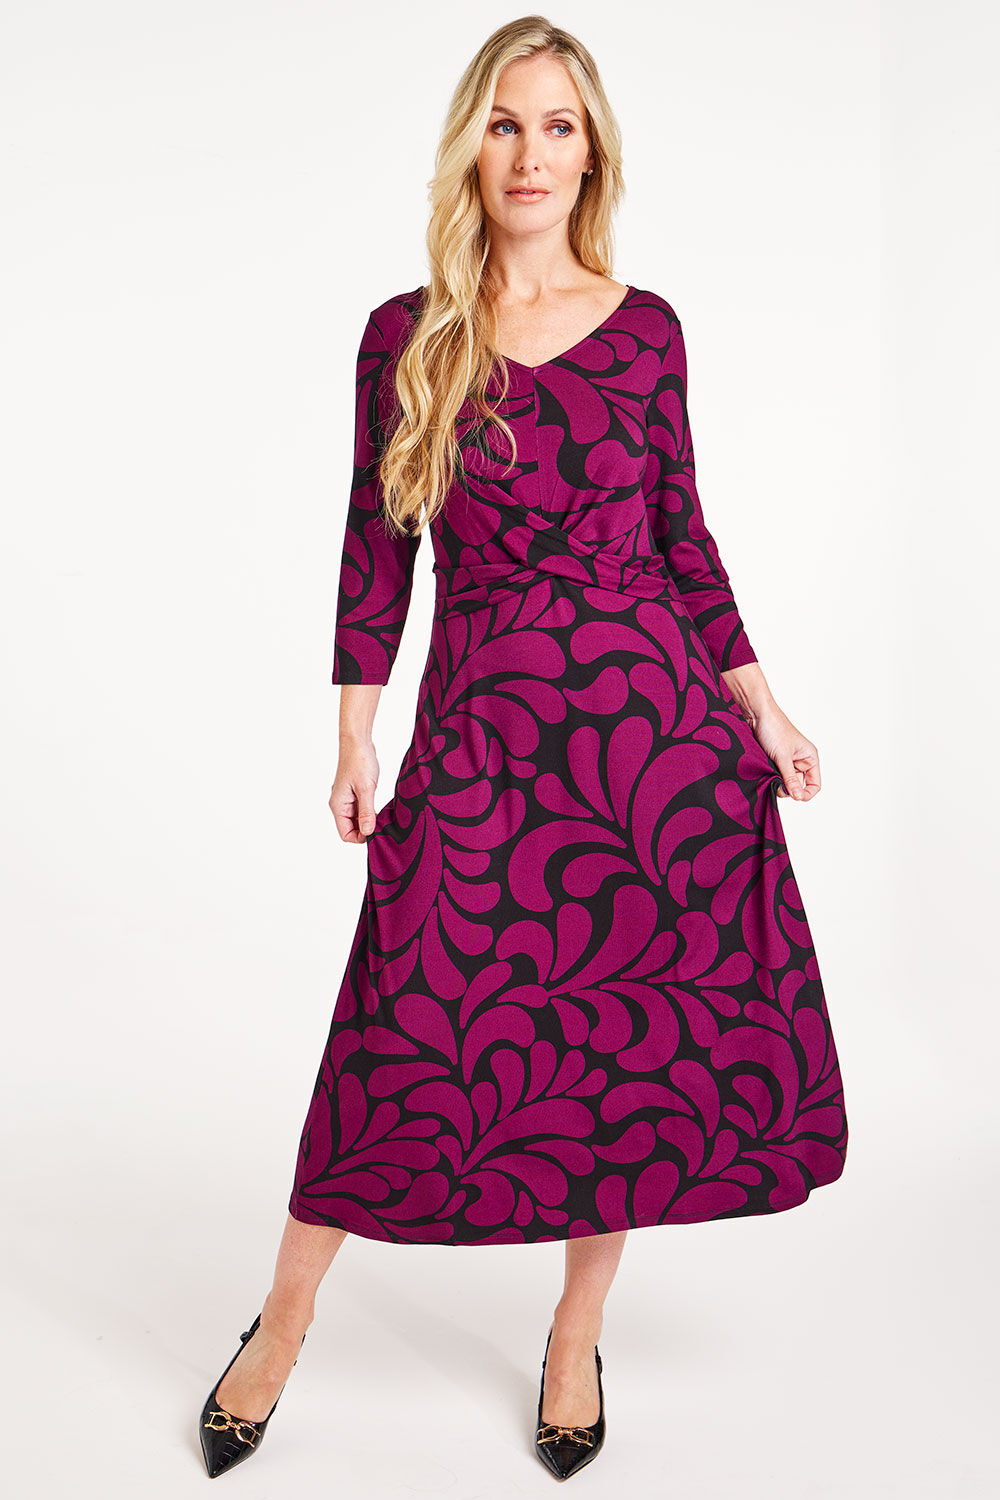 Bonmarche Women’s Purple and Black Viscose Swirl Print Twist Front Jersey Dress, Size: 12